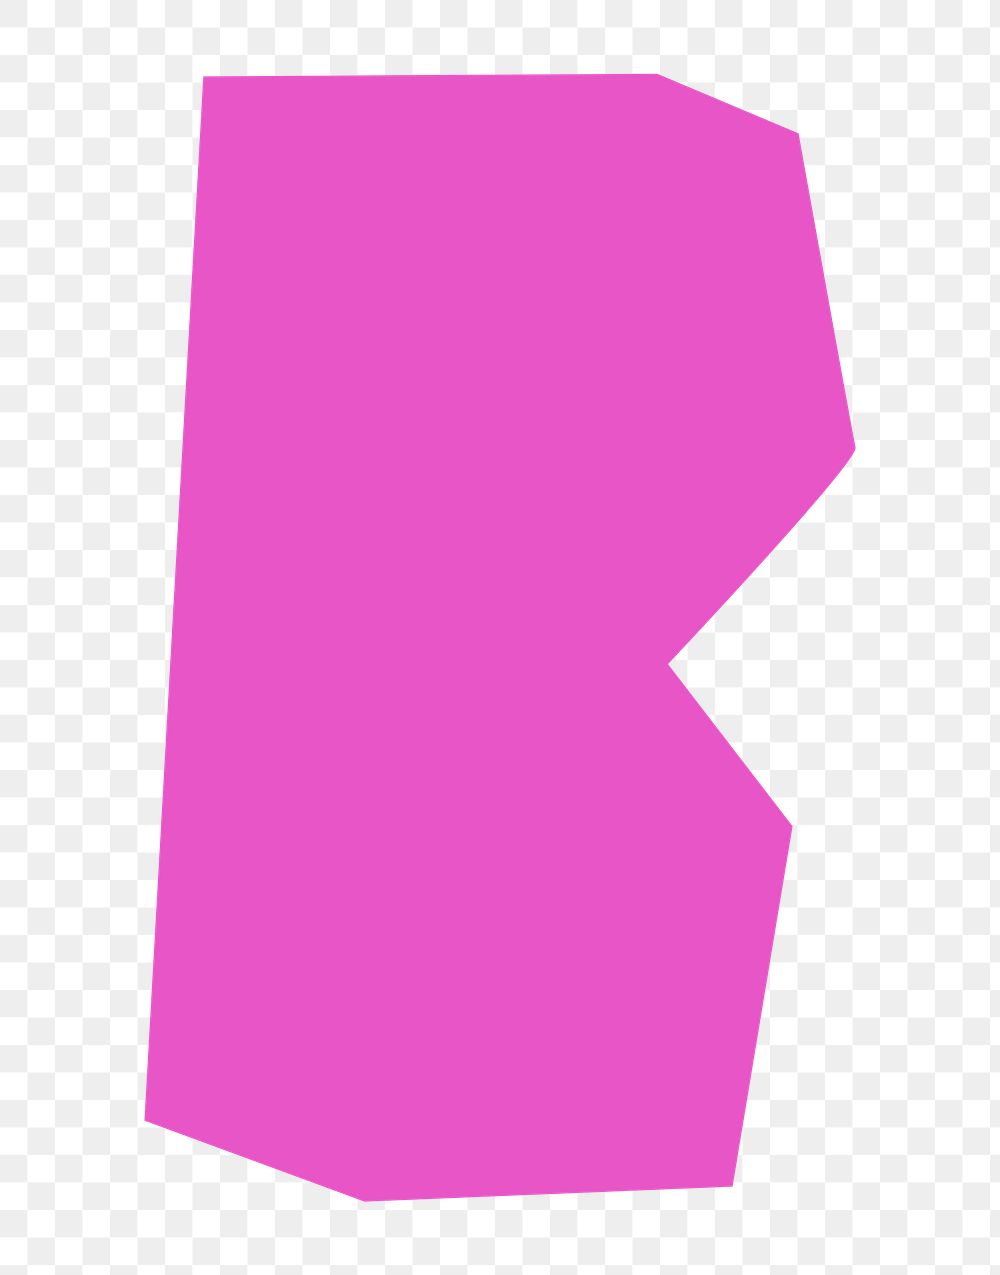 Letter B png in pink paper cut shape font, transparent background